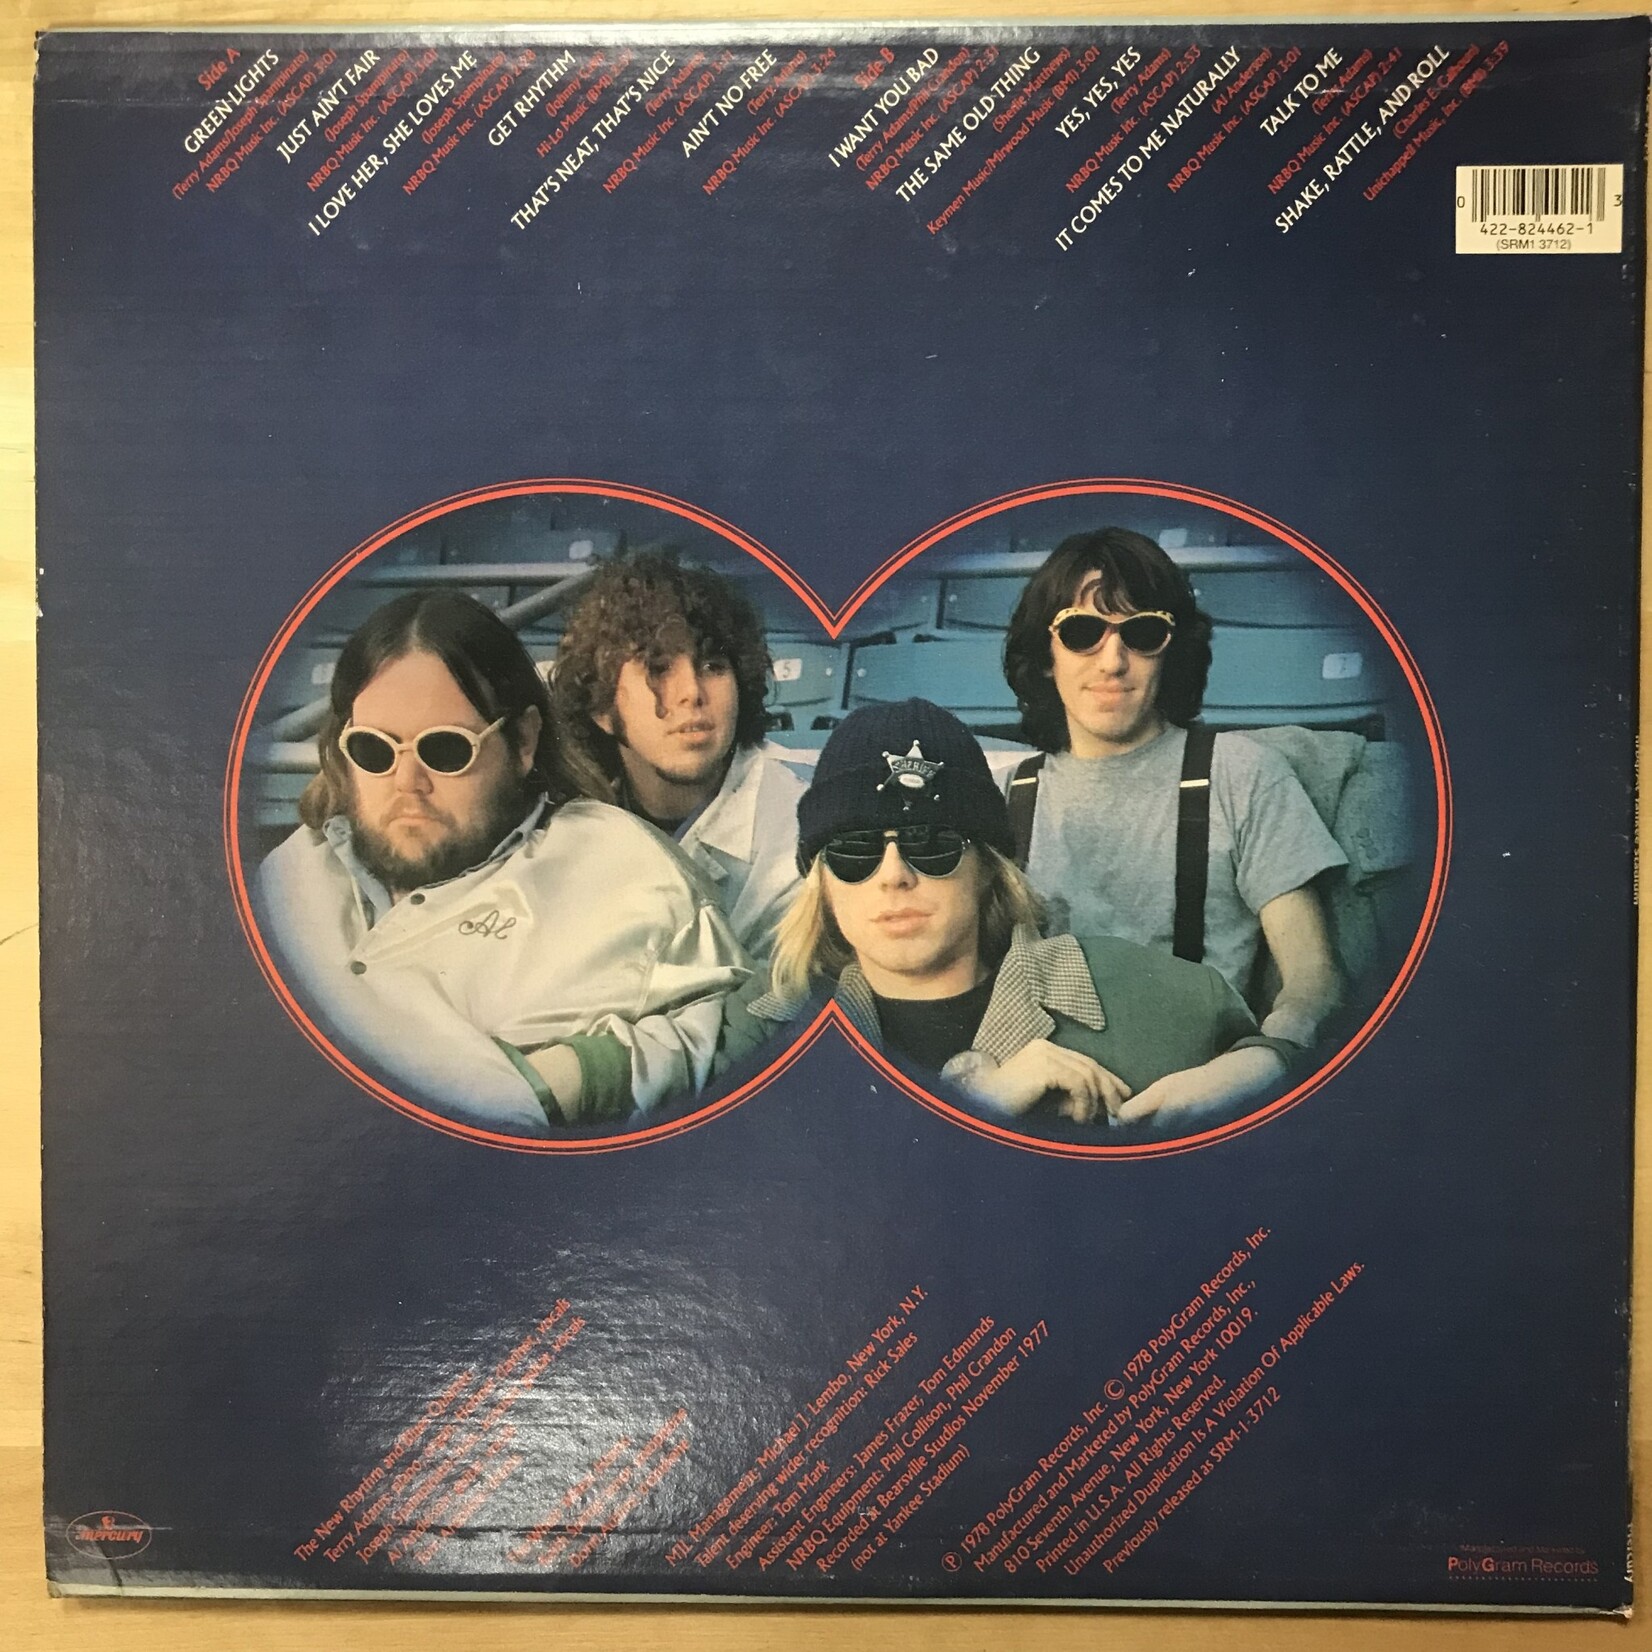 NRBQ - At Yankee Stadium - 422824 462 - Vinyl LP (USED)